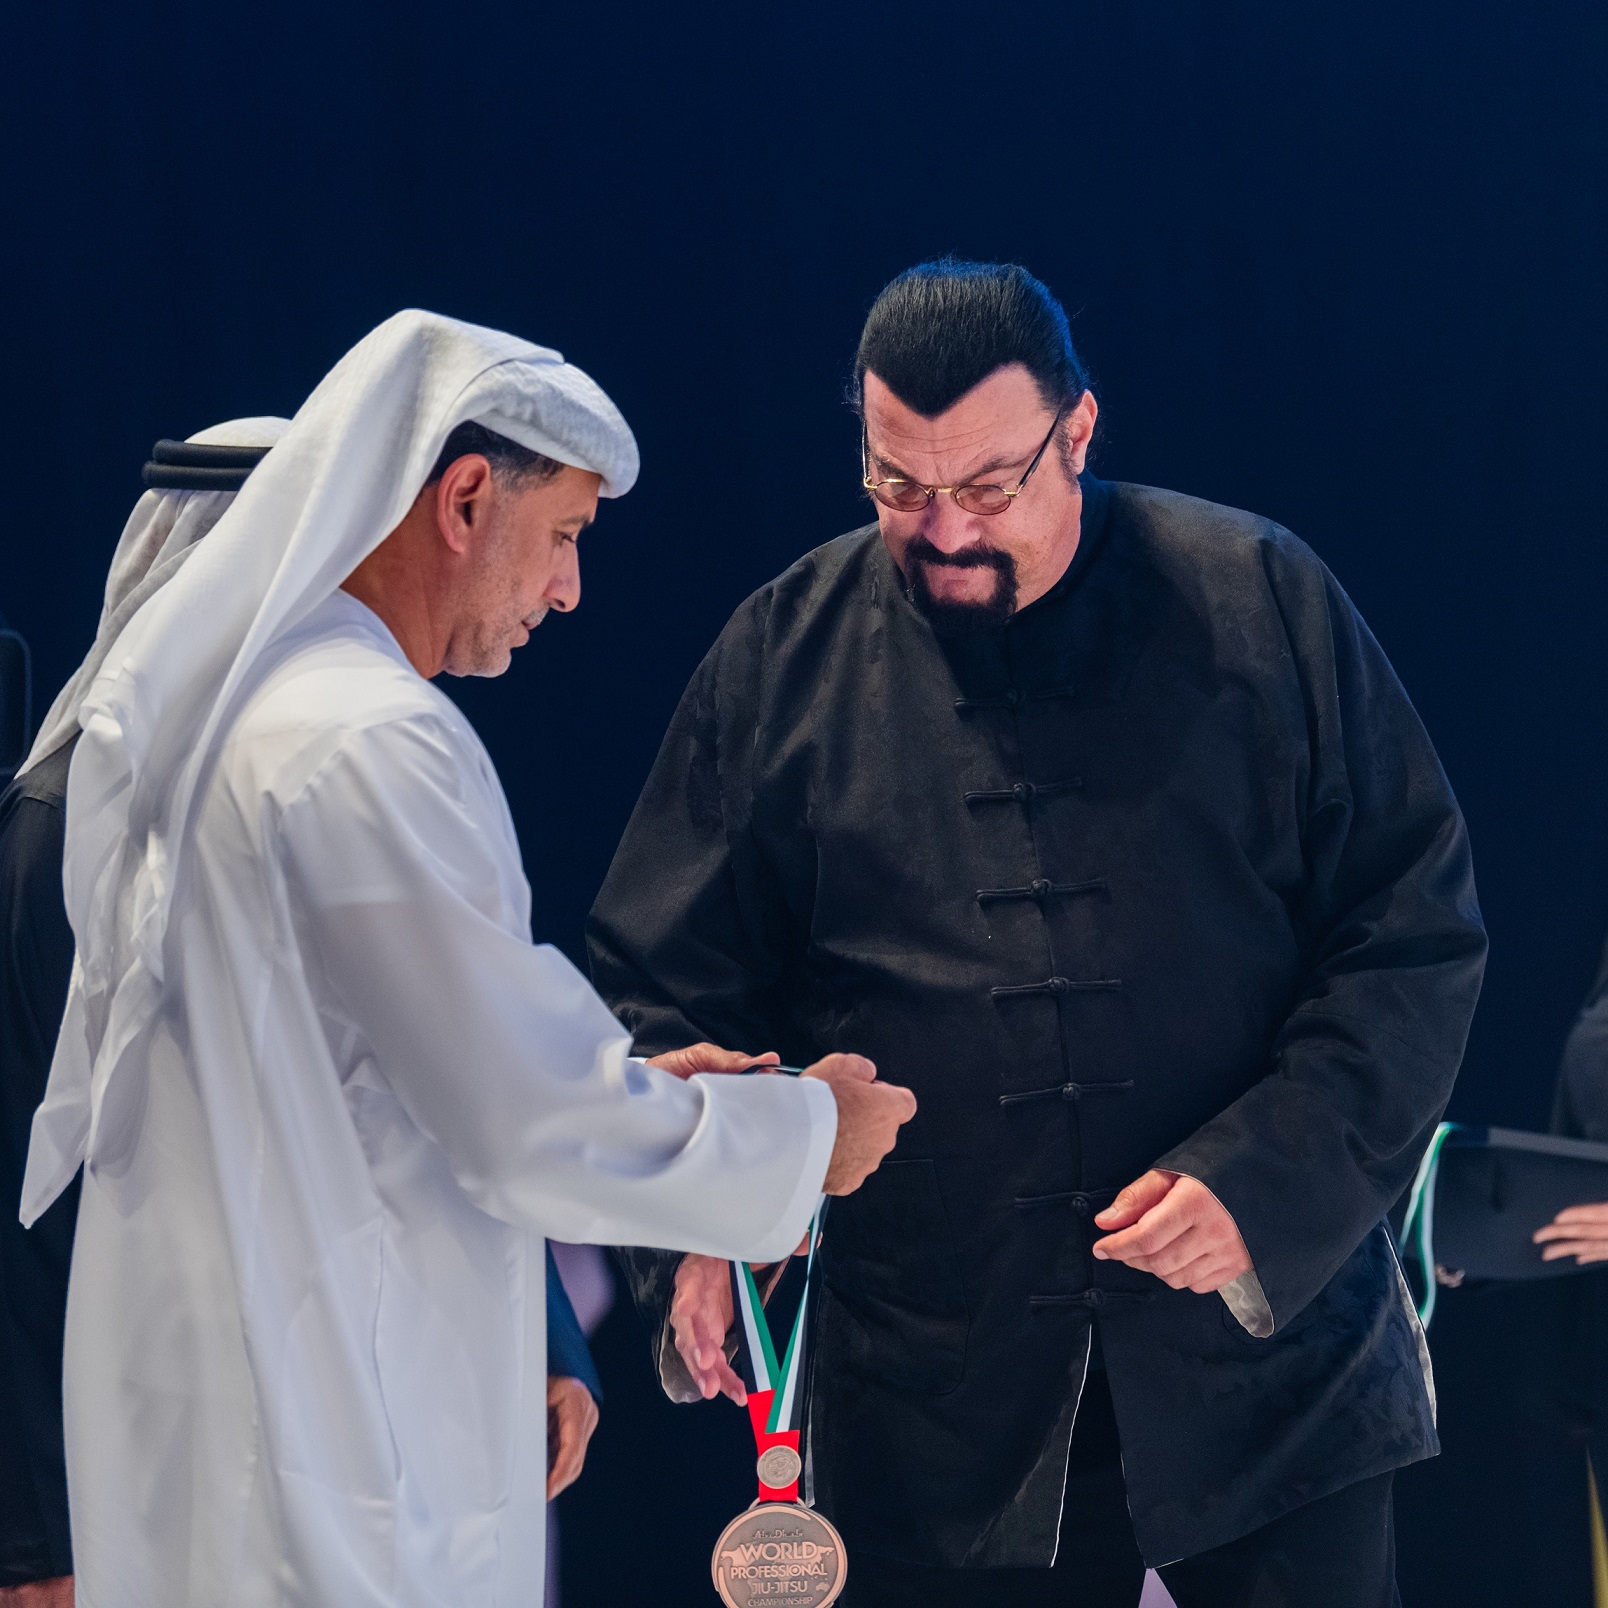 ACTION HERO SEAGAL HIGHLIGHTS GLOBAL APPEAL OF ABU DHABI WORLD PROFESSIONAL JIU-JITSU CHAMPIONSHIP